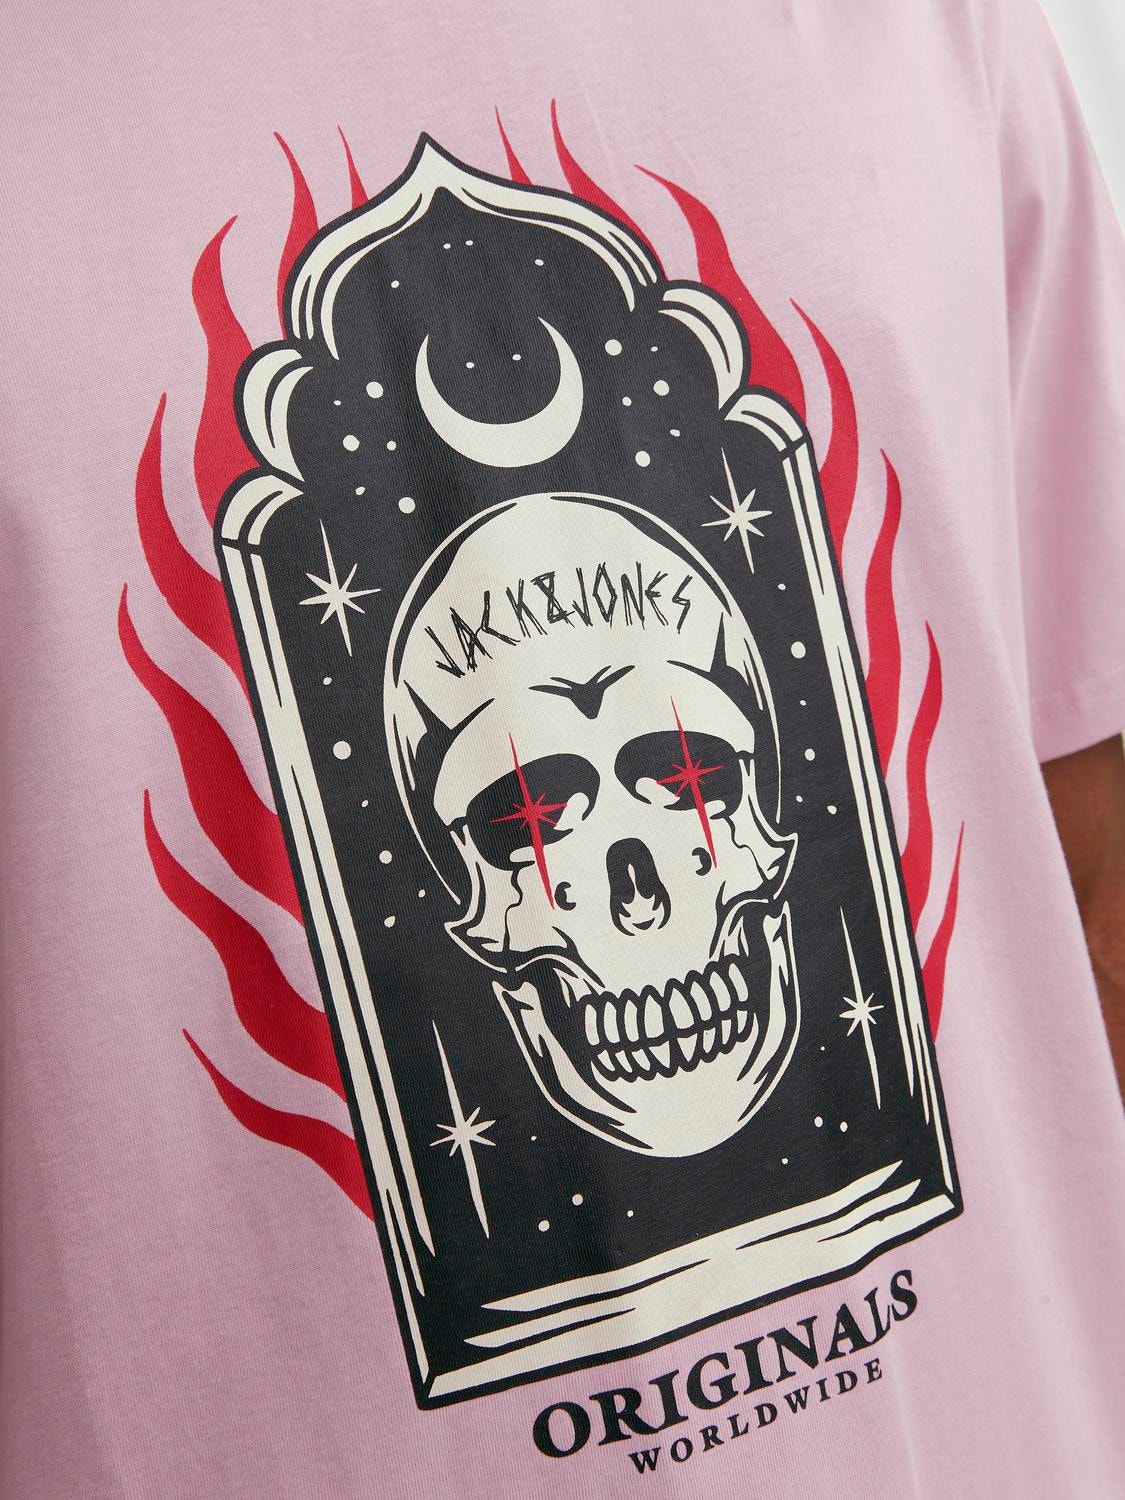 Jack & Jones Printet Crew neck T-shirt -Pink Nectar - 12249345